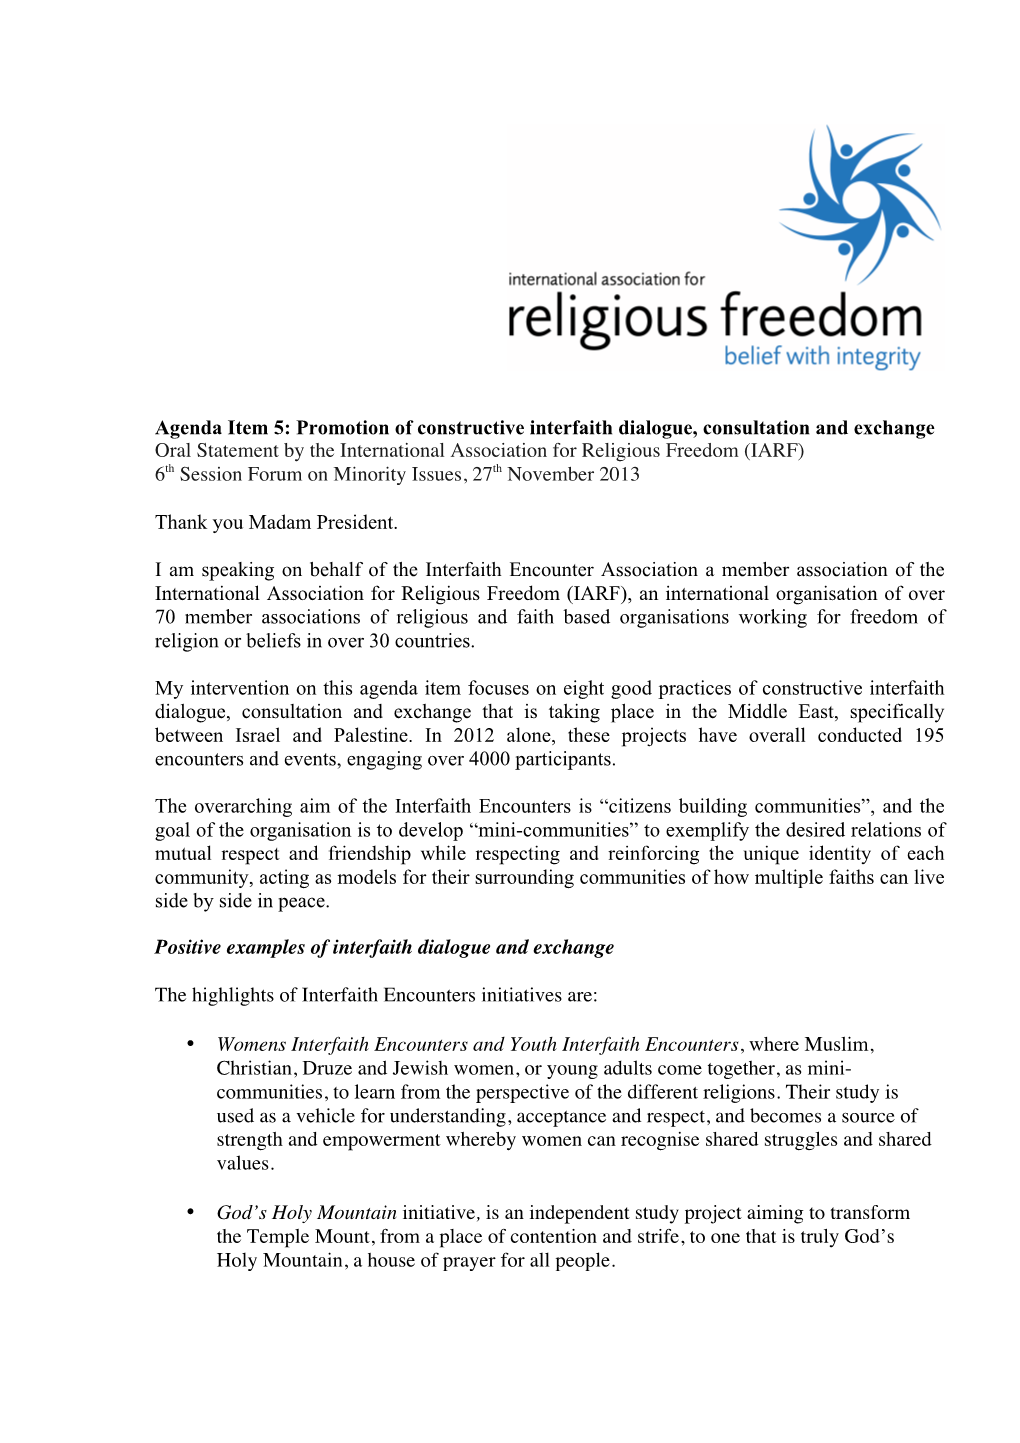 Agenda Item 5: Promotion of Constructive Interfaith Dialogue